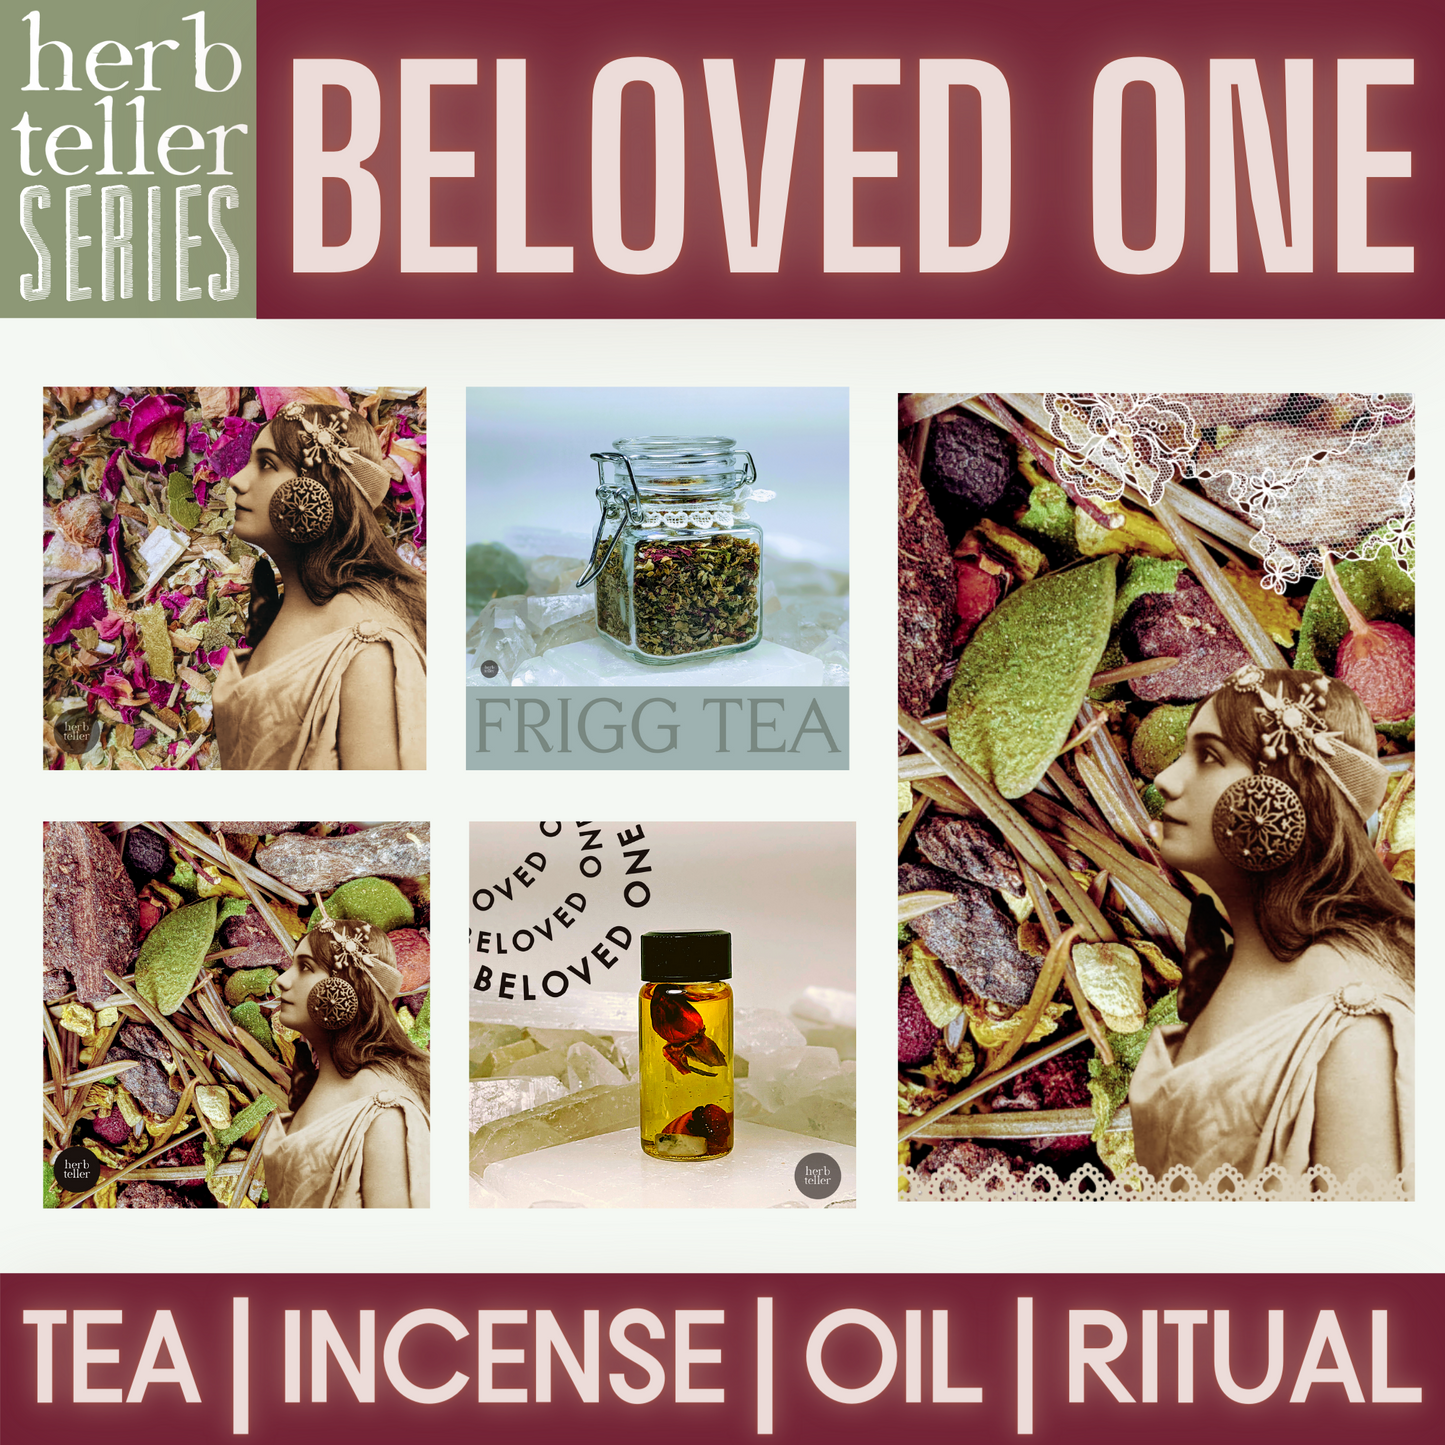 Frigg's Favor Herbal Tea/Infusion